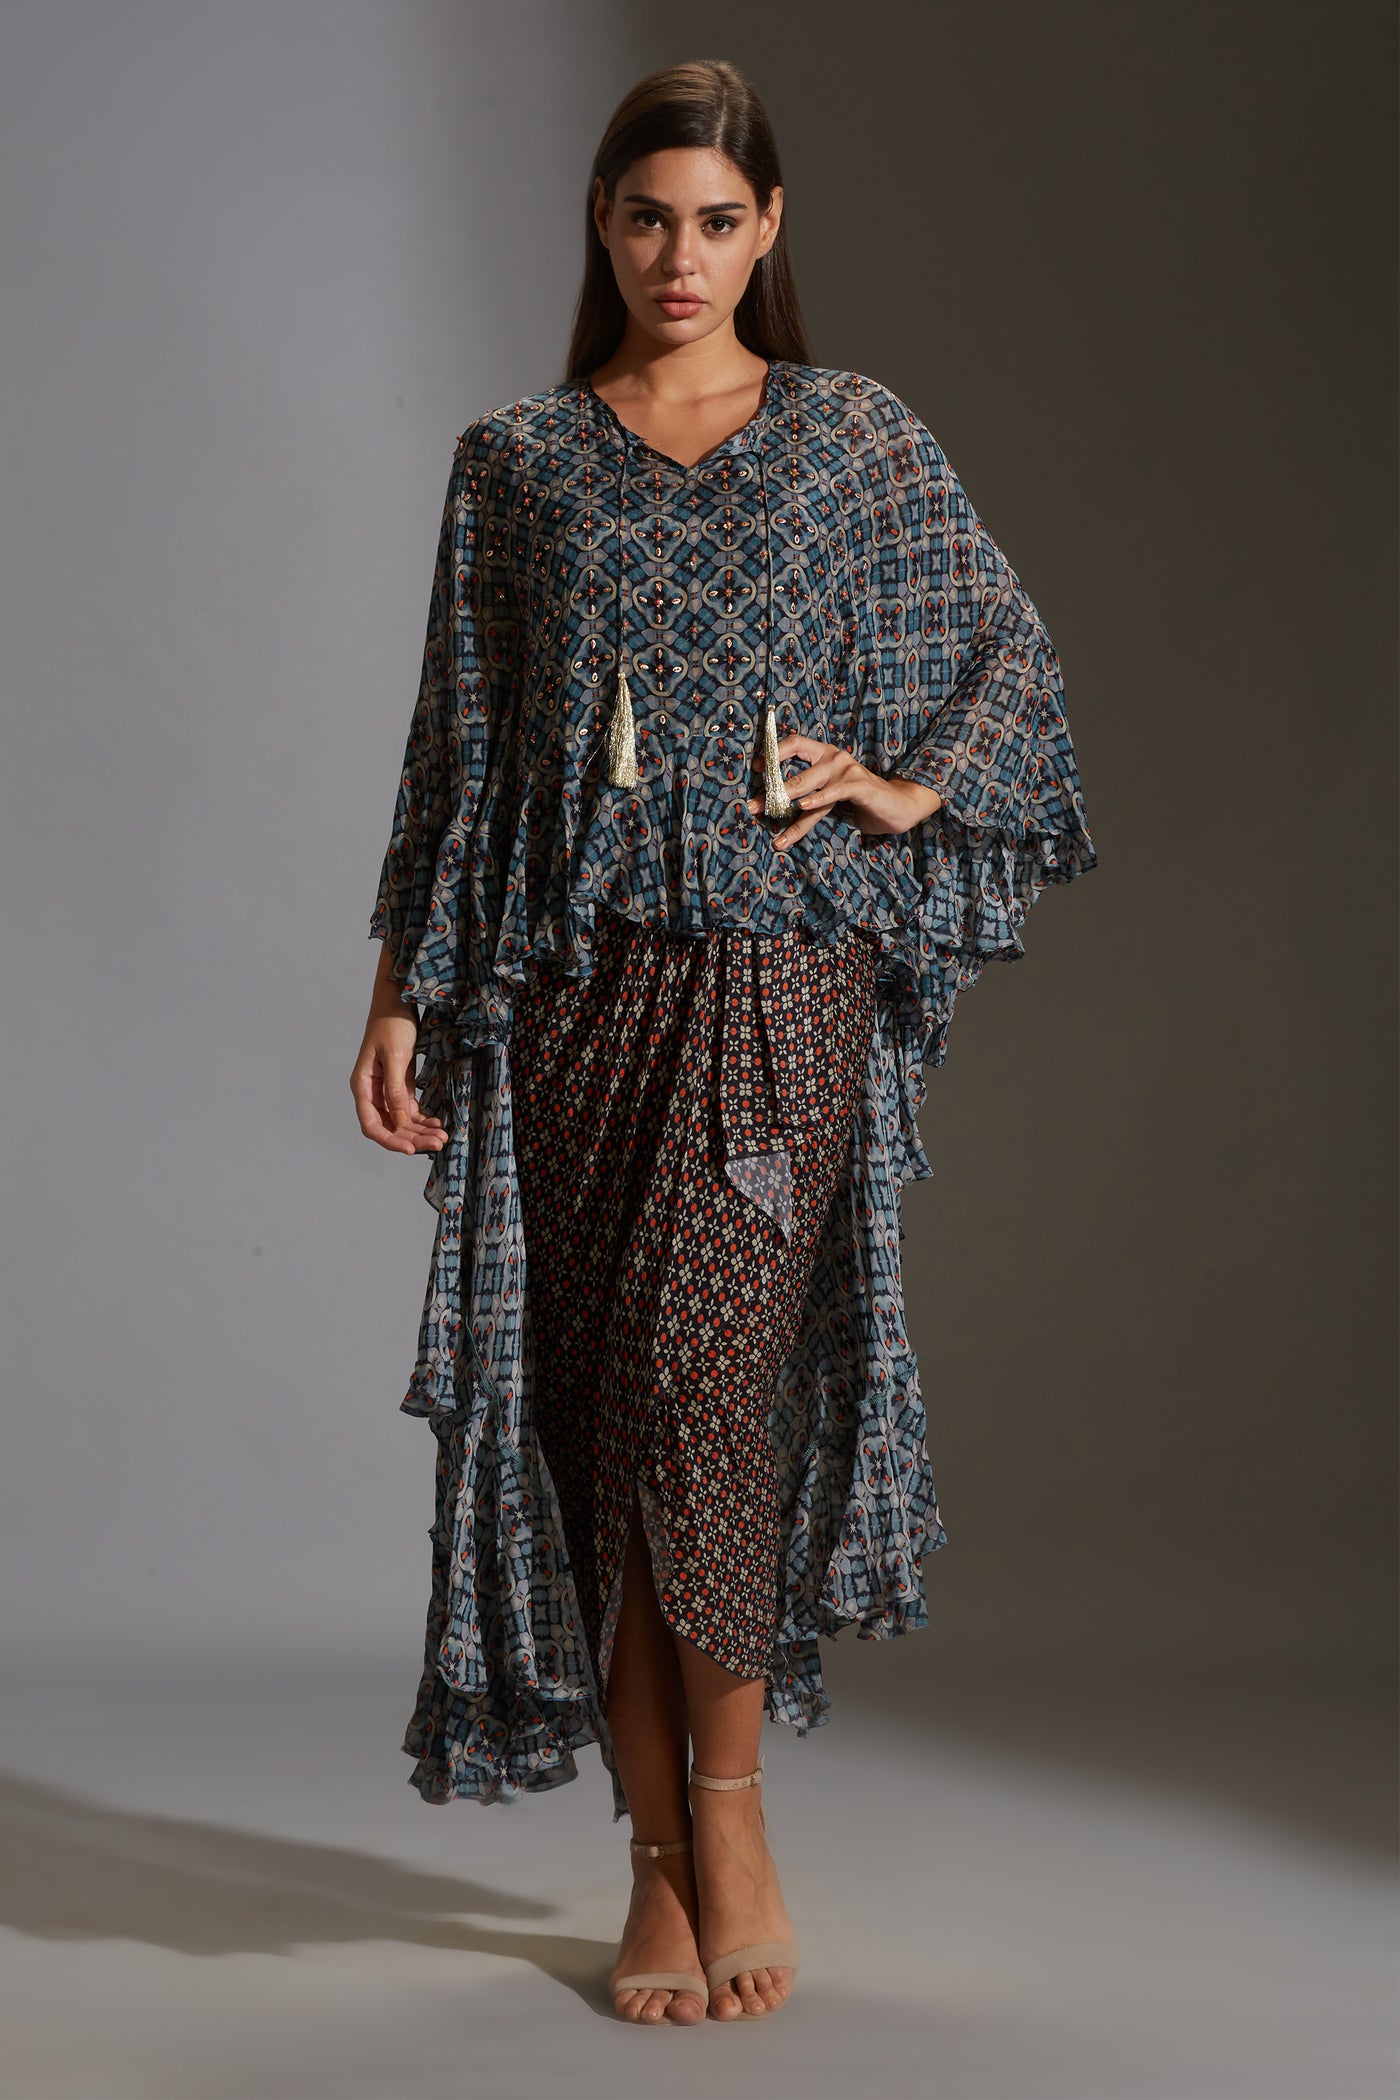 sougat paul Printed drape dress with asymmetrical top with frills blue fusion online shopping melange singapore indian designer wear